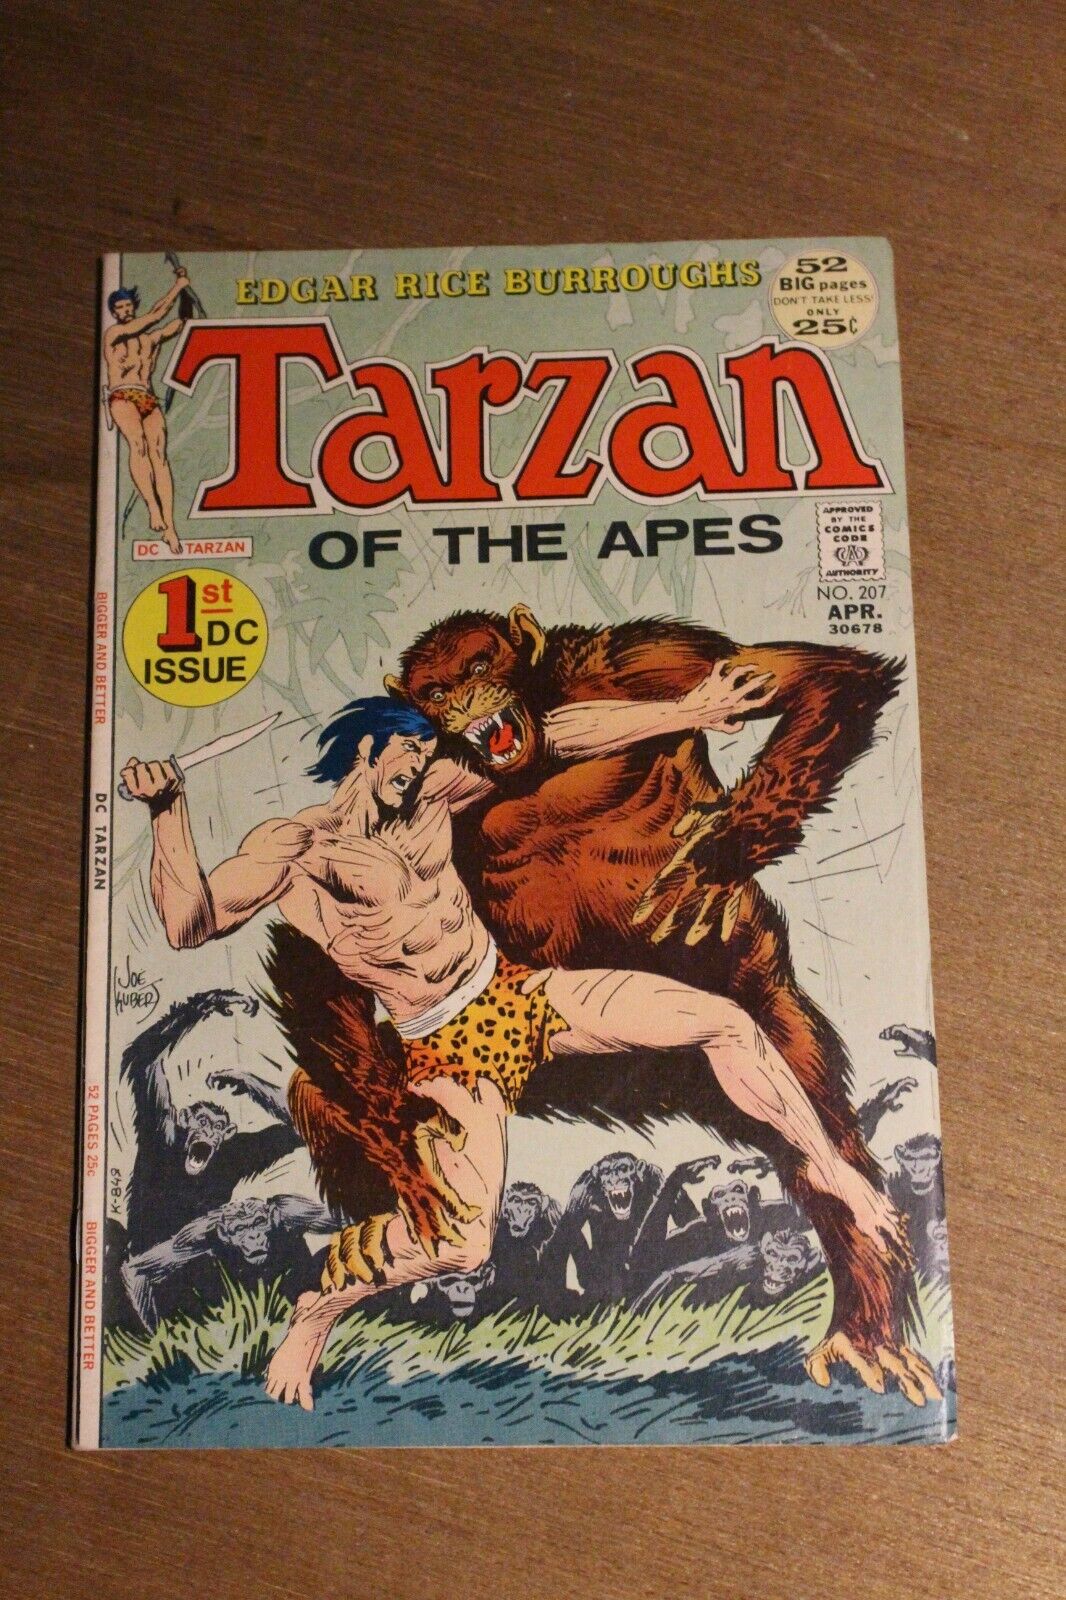 Tarzan of the Apes Vol. 25 #207 (1st DC issue), Fine, 6.0, 1972, DC Comics